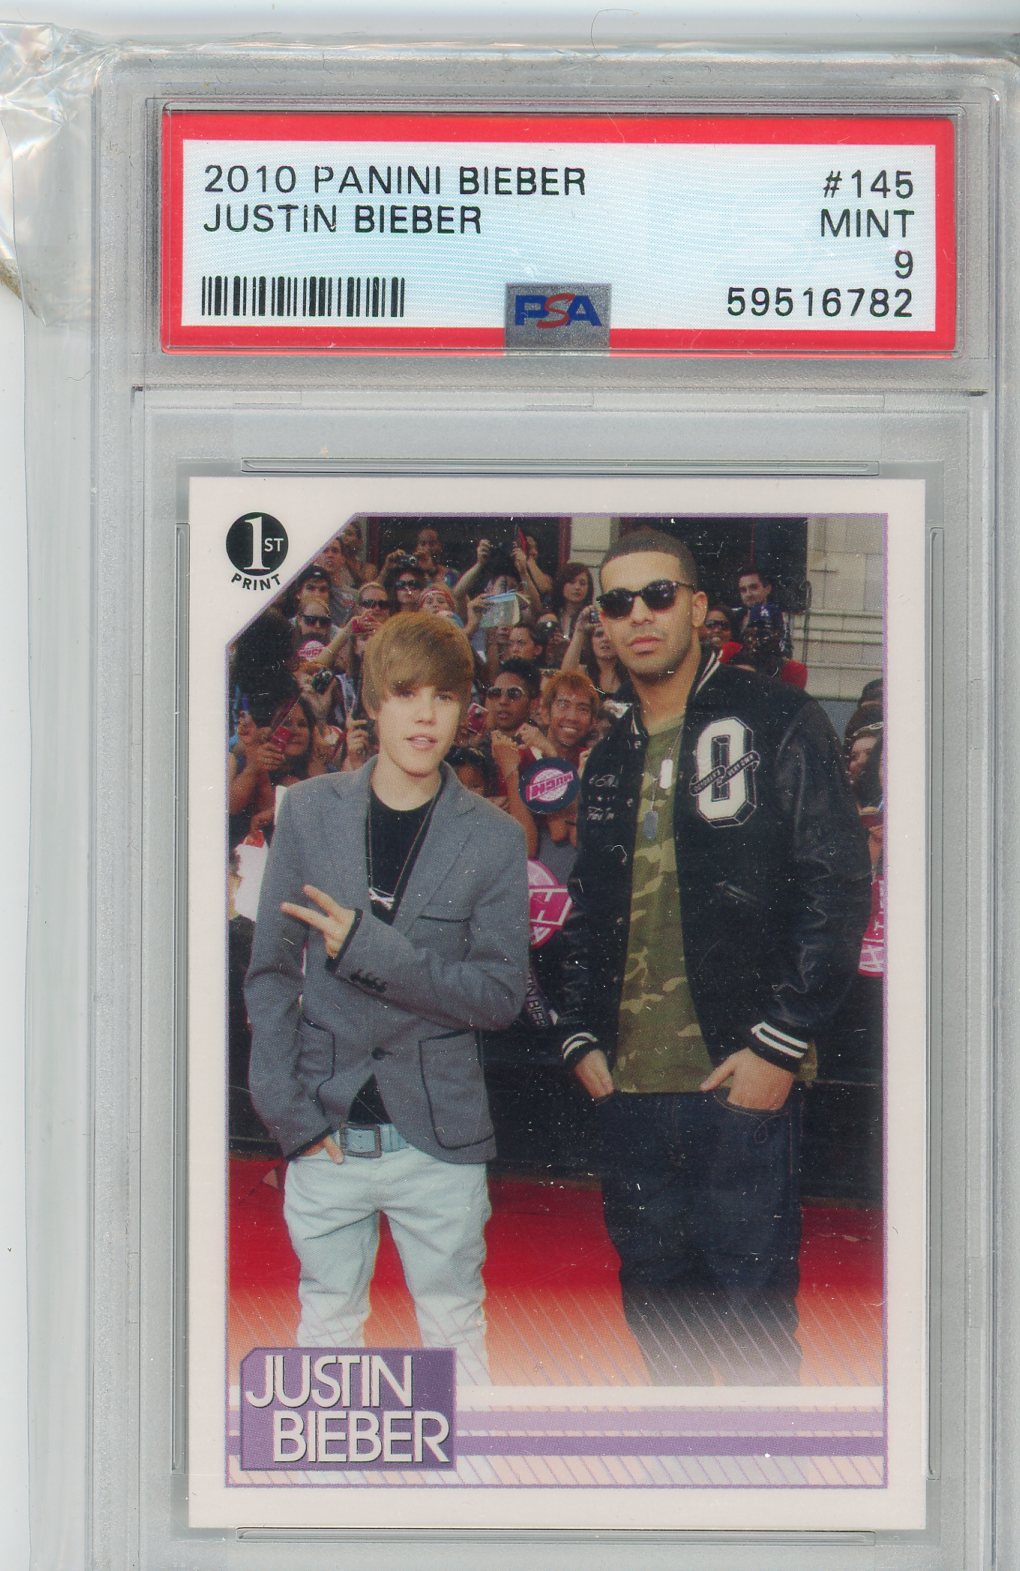 2010 Panini Justin Bieber Card #145 PSA 9